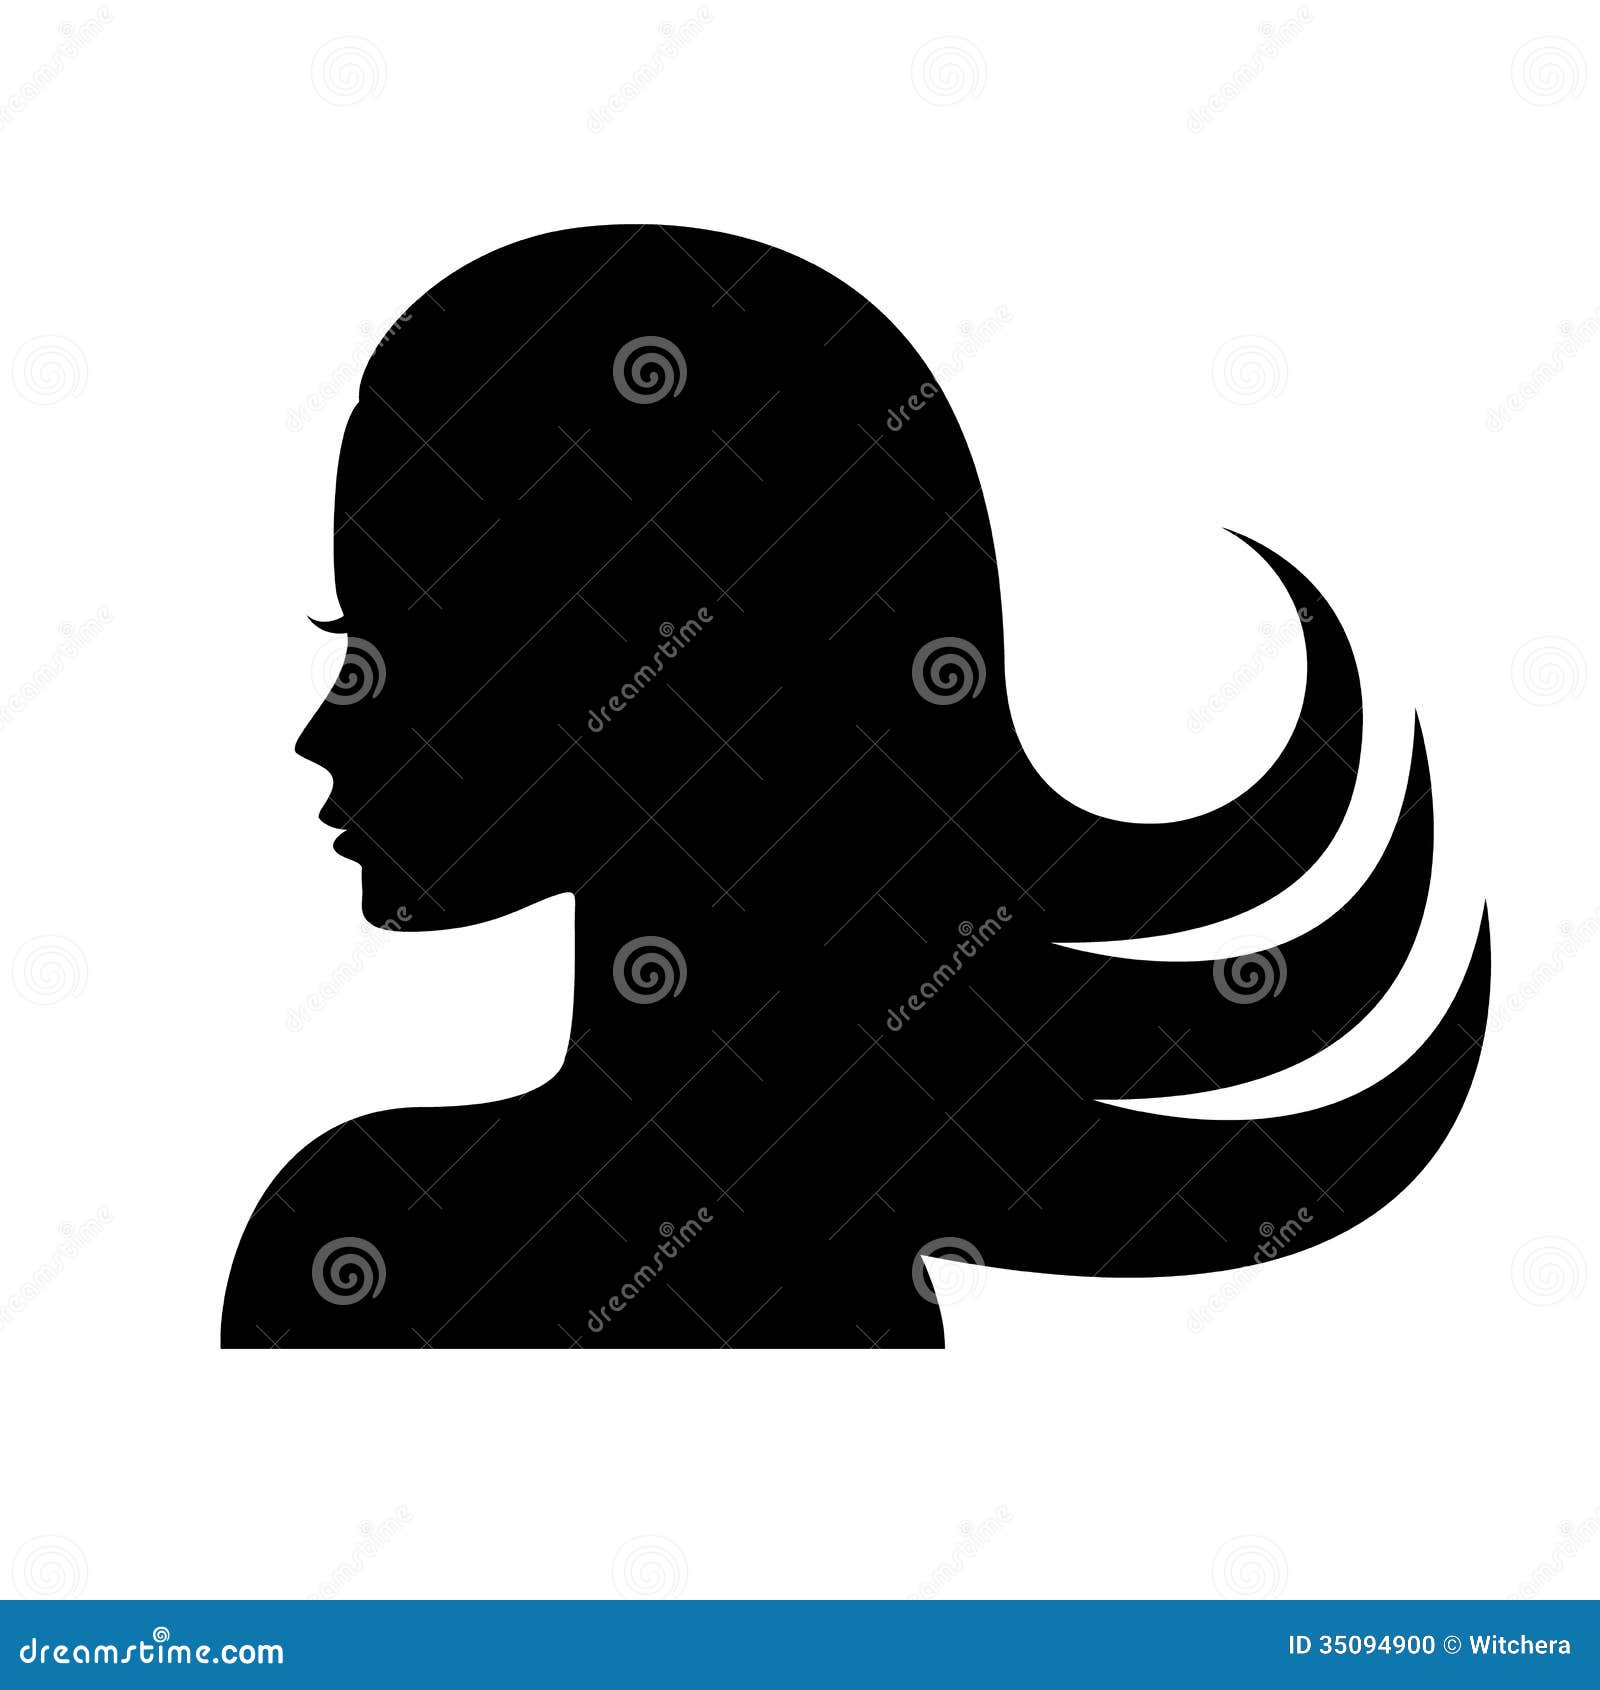 silueta de #perfil de #rostro #cara #face #silhouette #at…